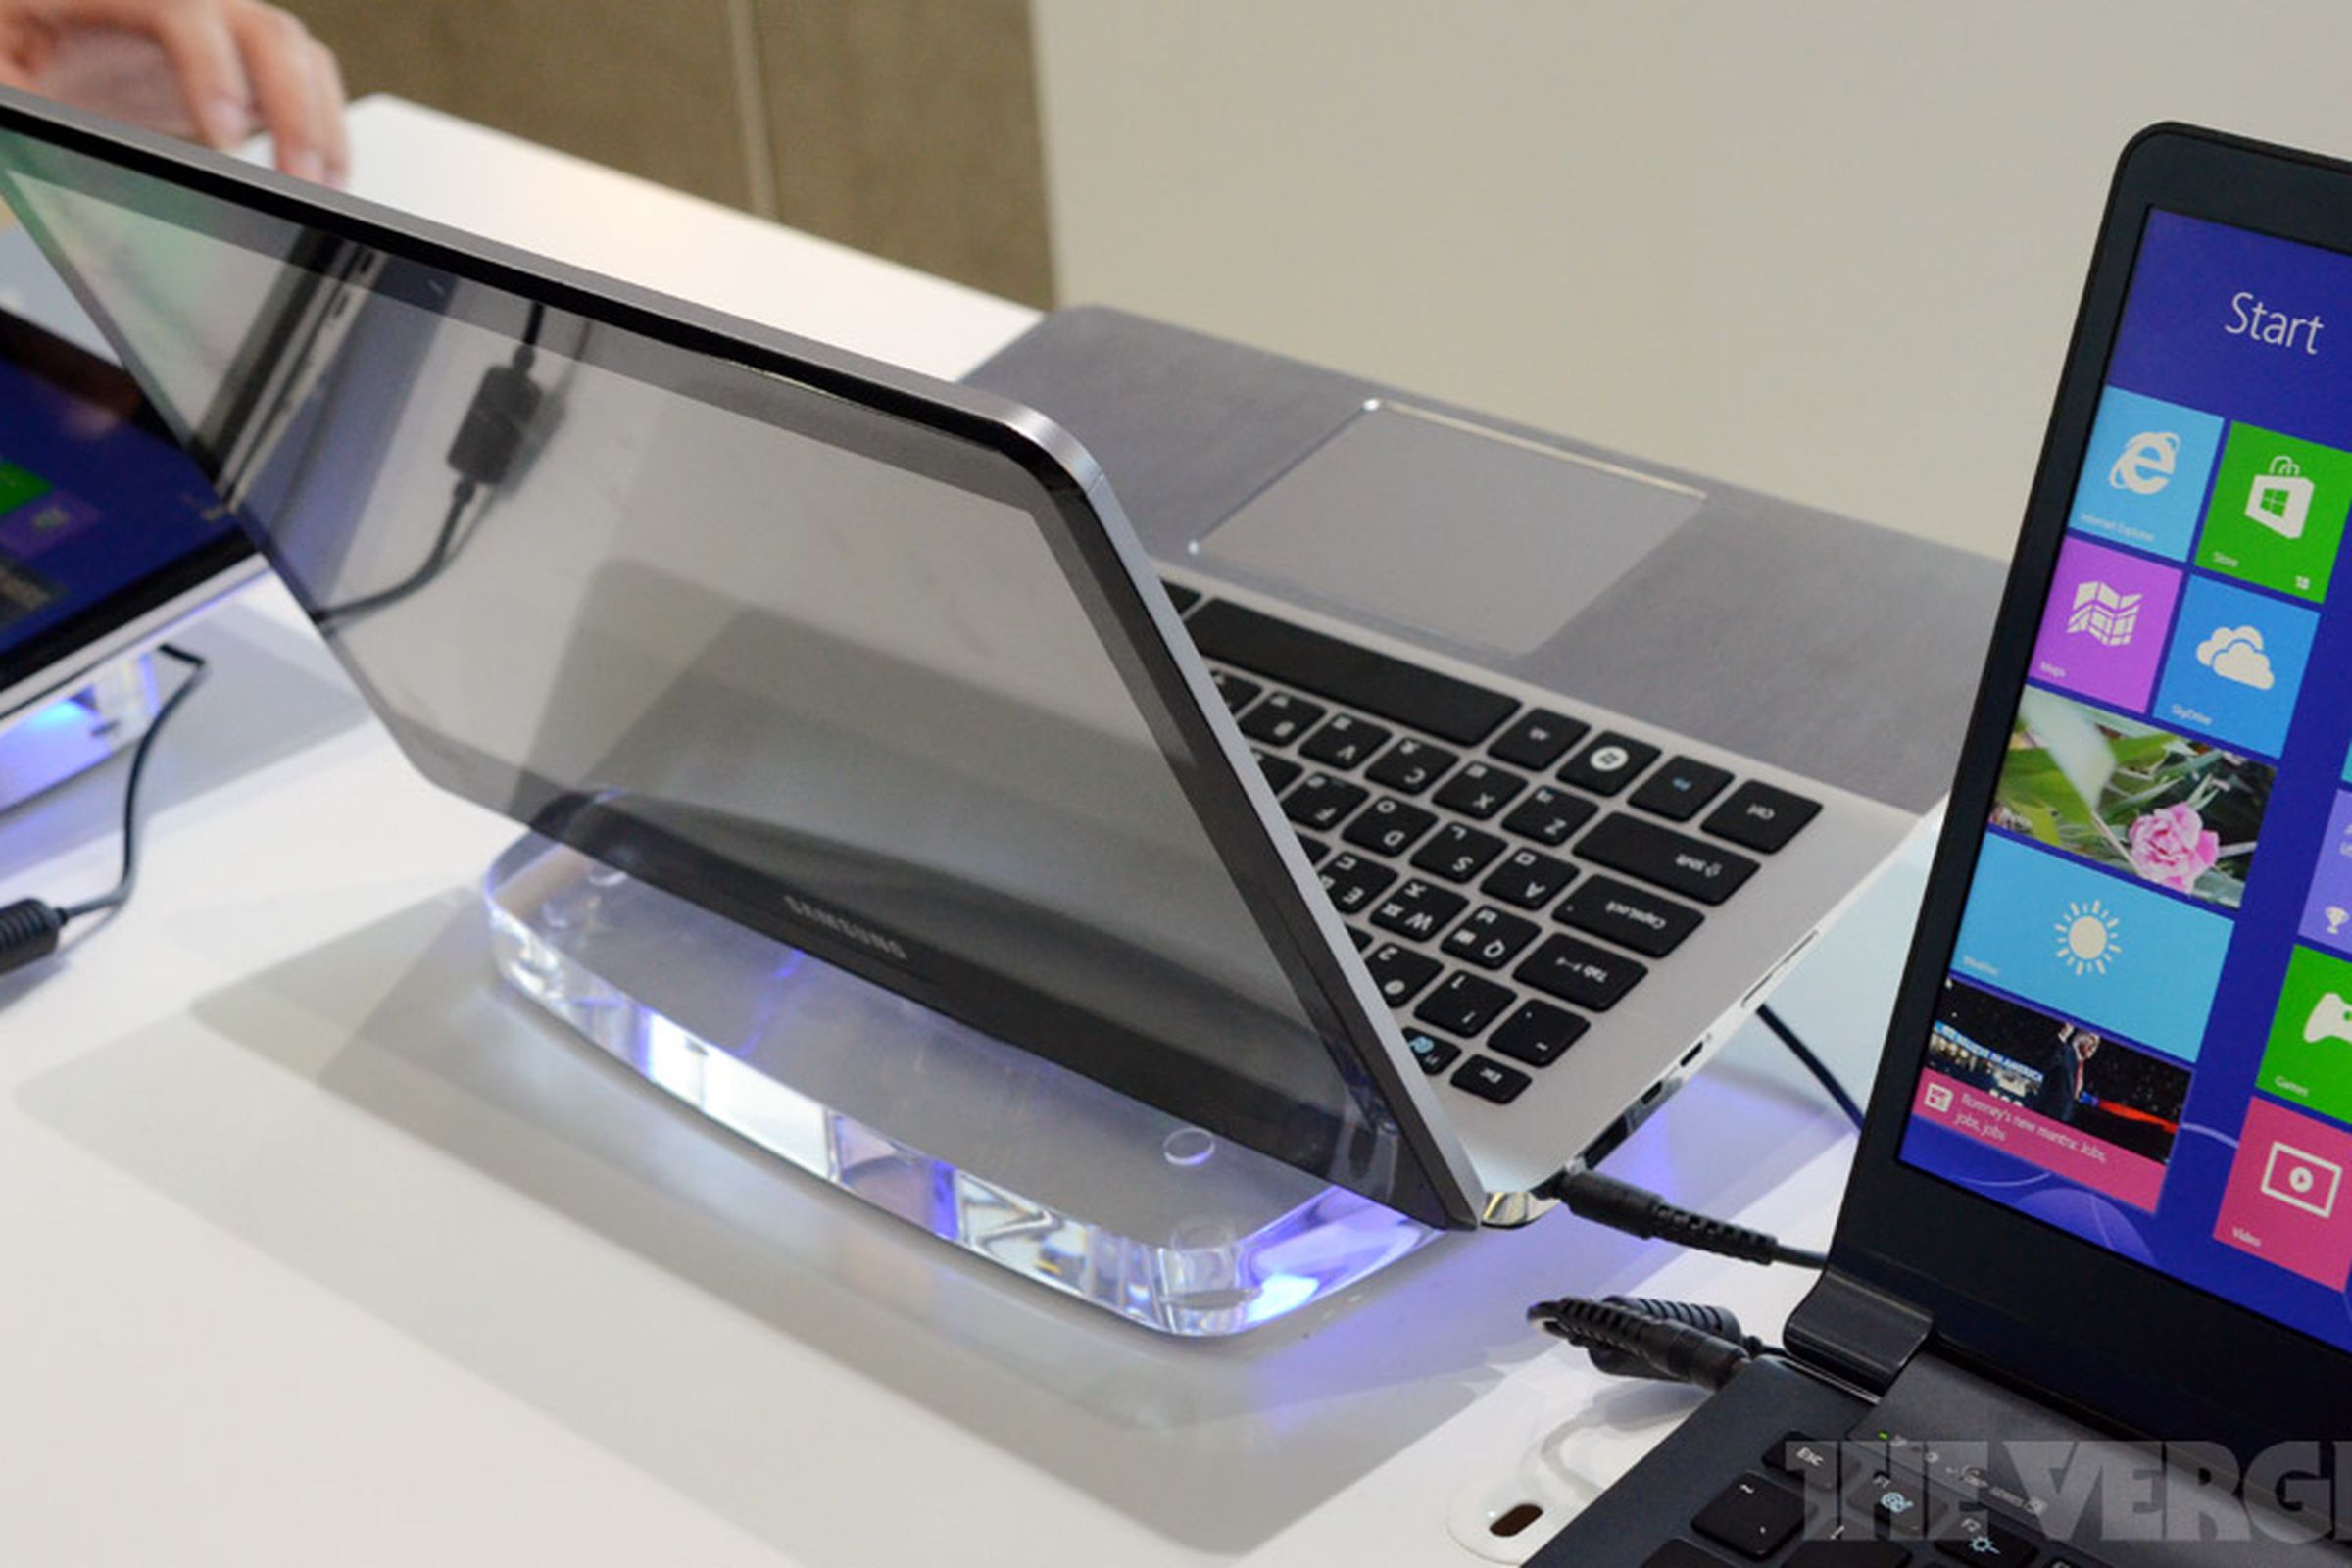 Samsung Dual Display Prototype at IFA 2012